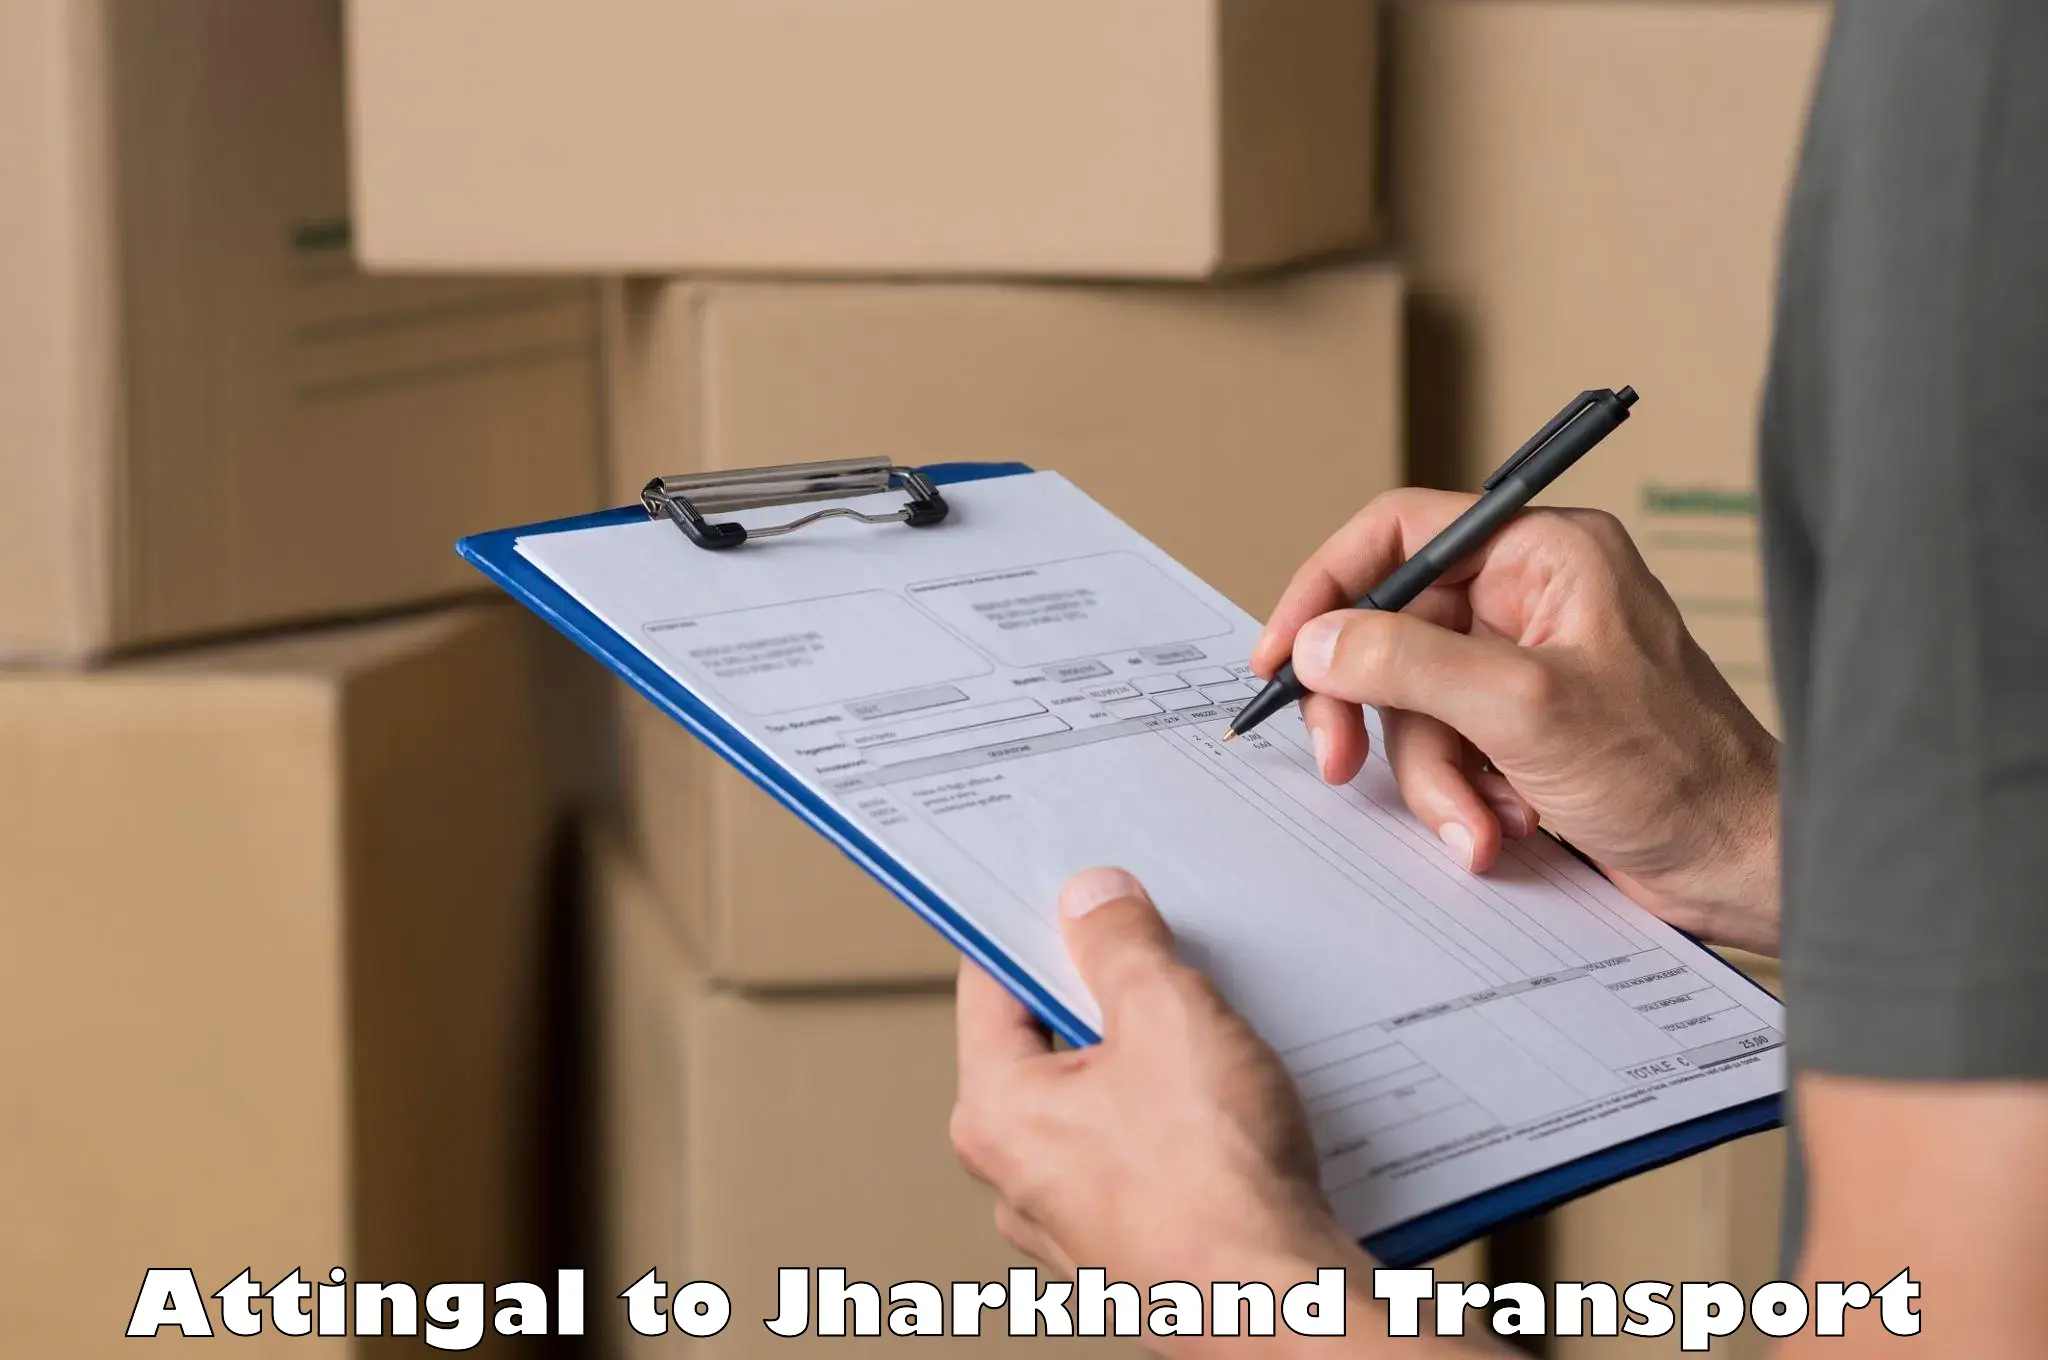 Commercial transport service Attingal to Shikaripara